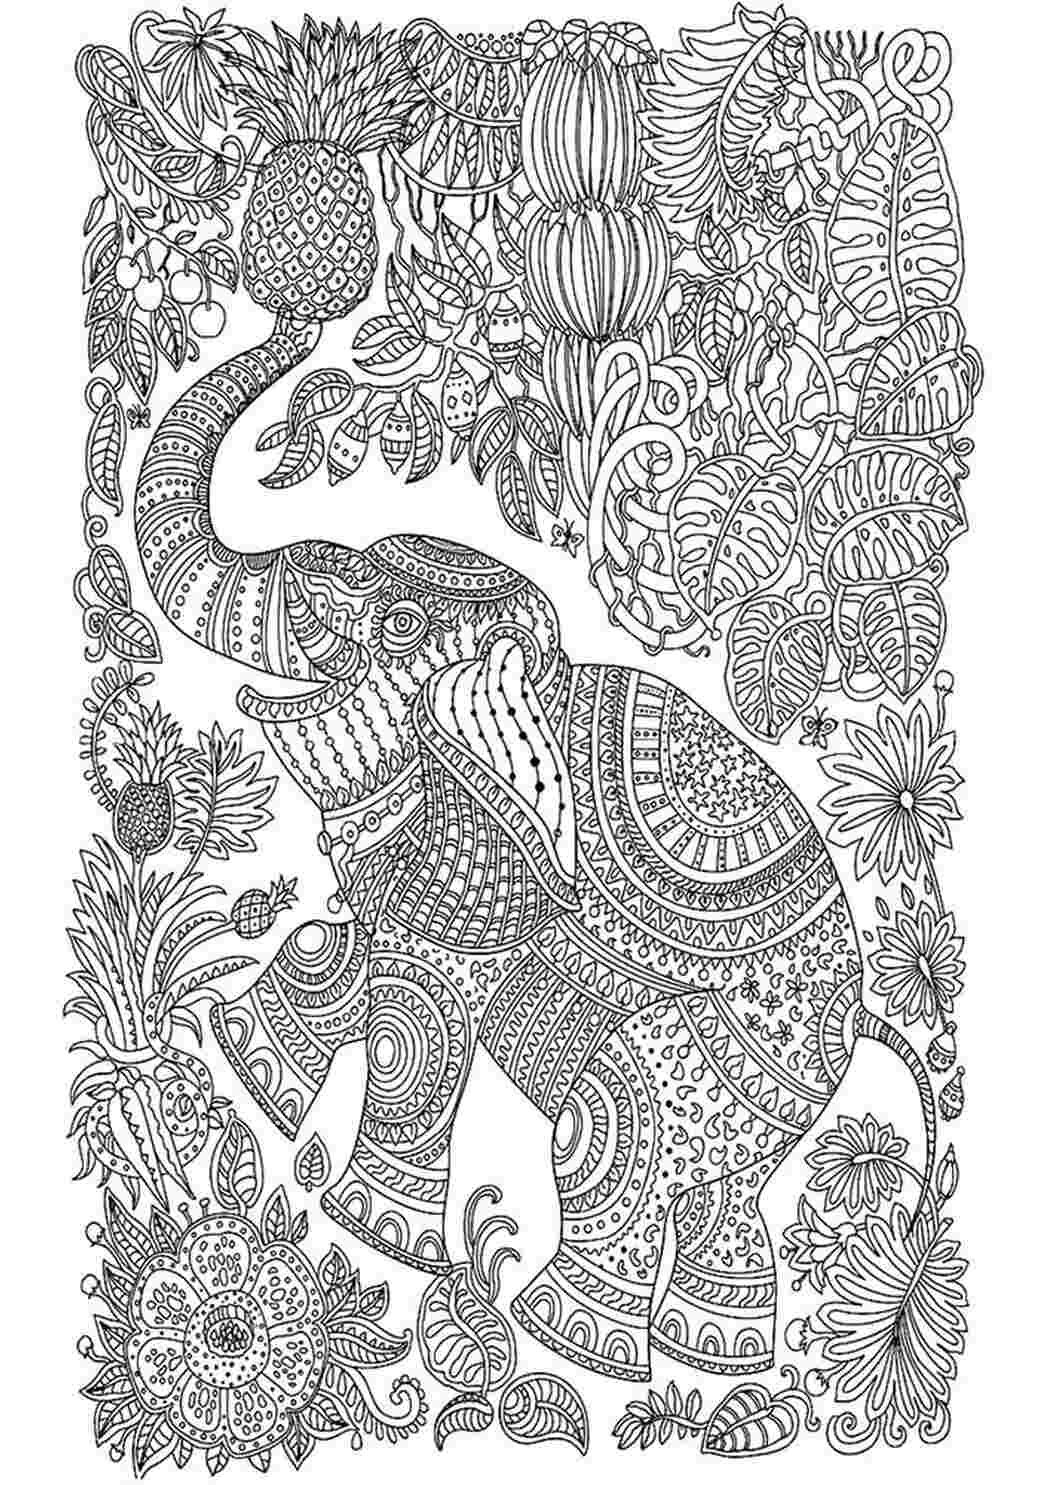 Раскраска антистресс слон